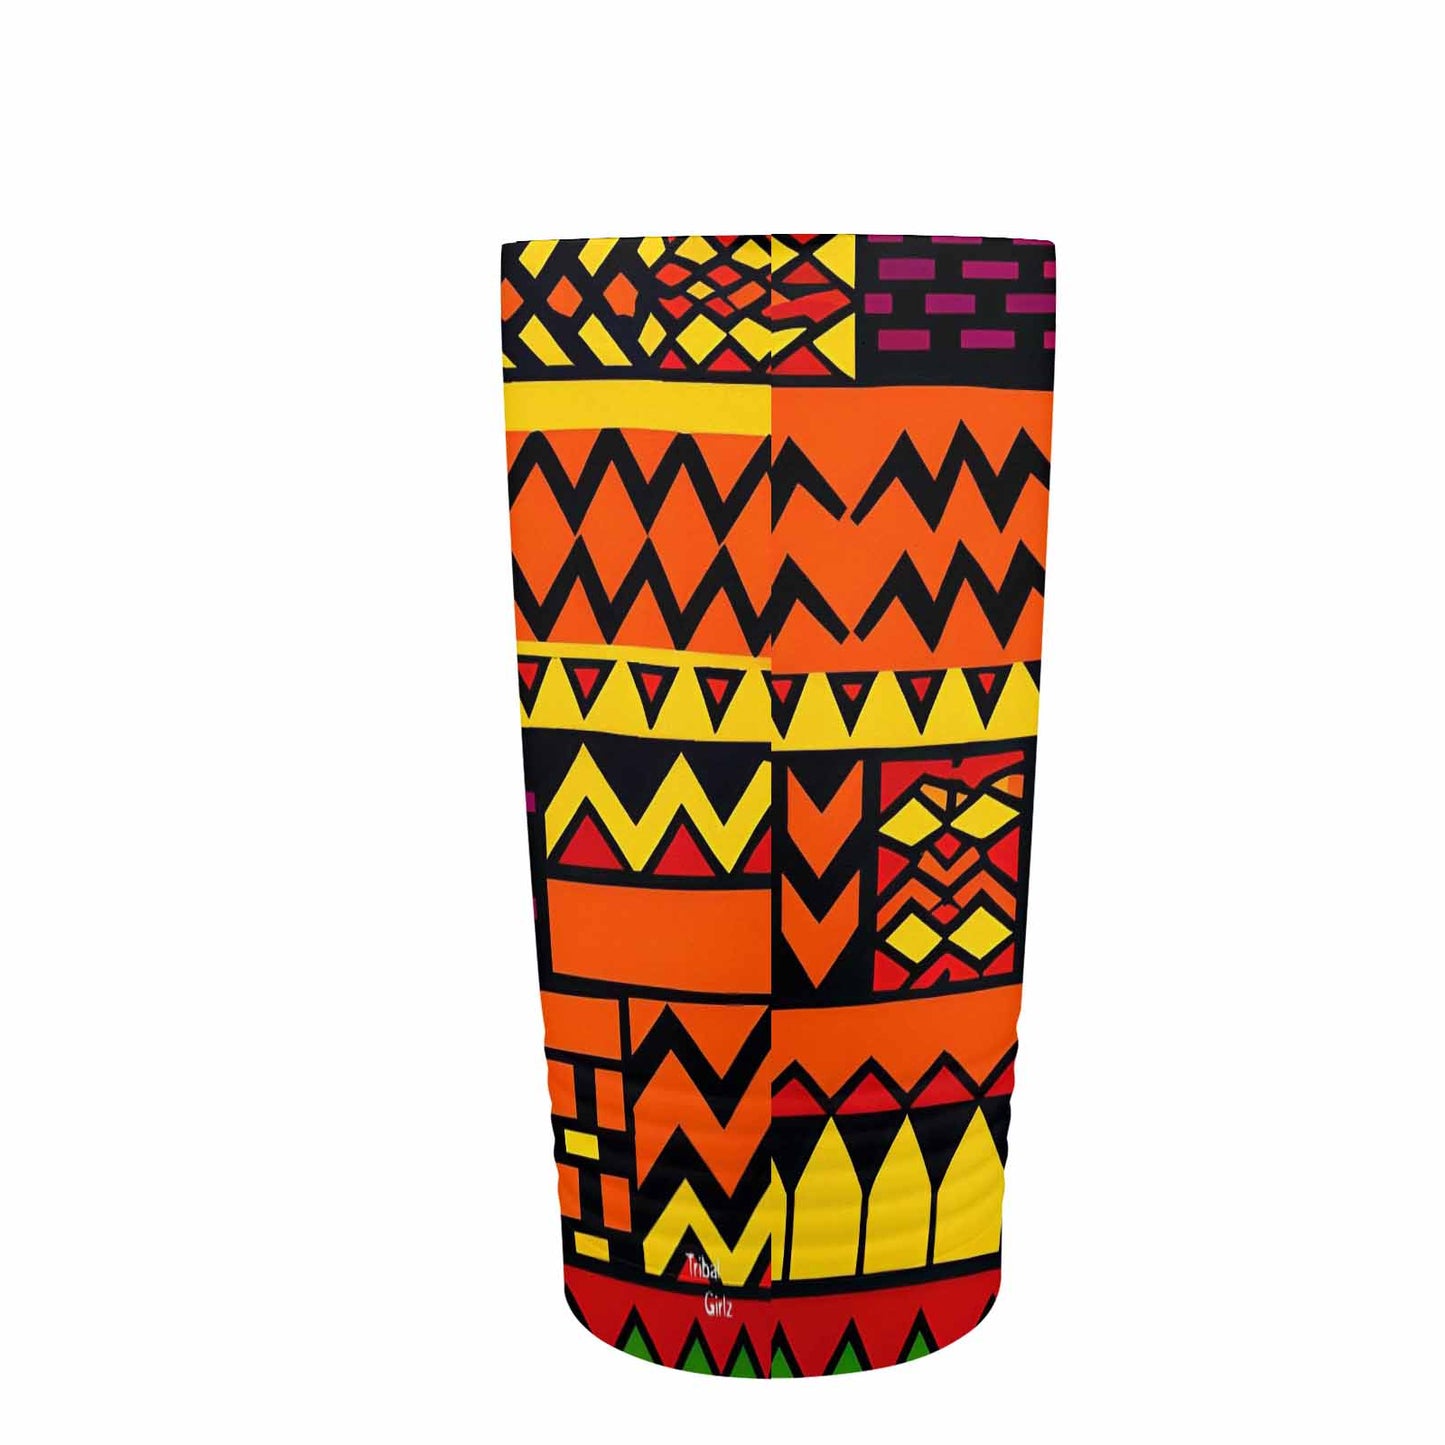 African Art, stainless steel insulated tumbler, travel mug, design 38